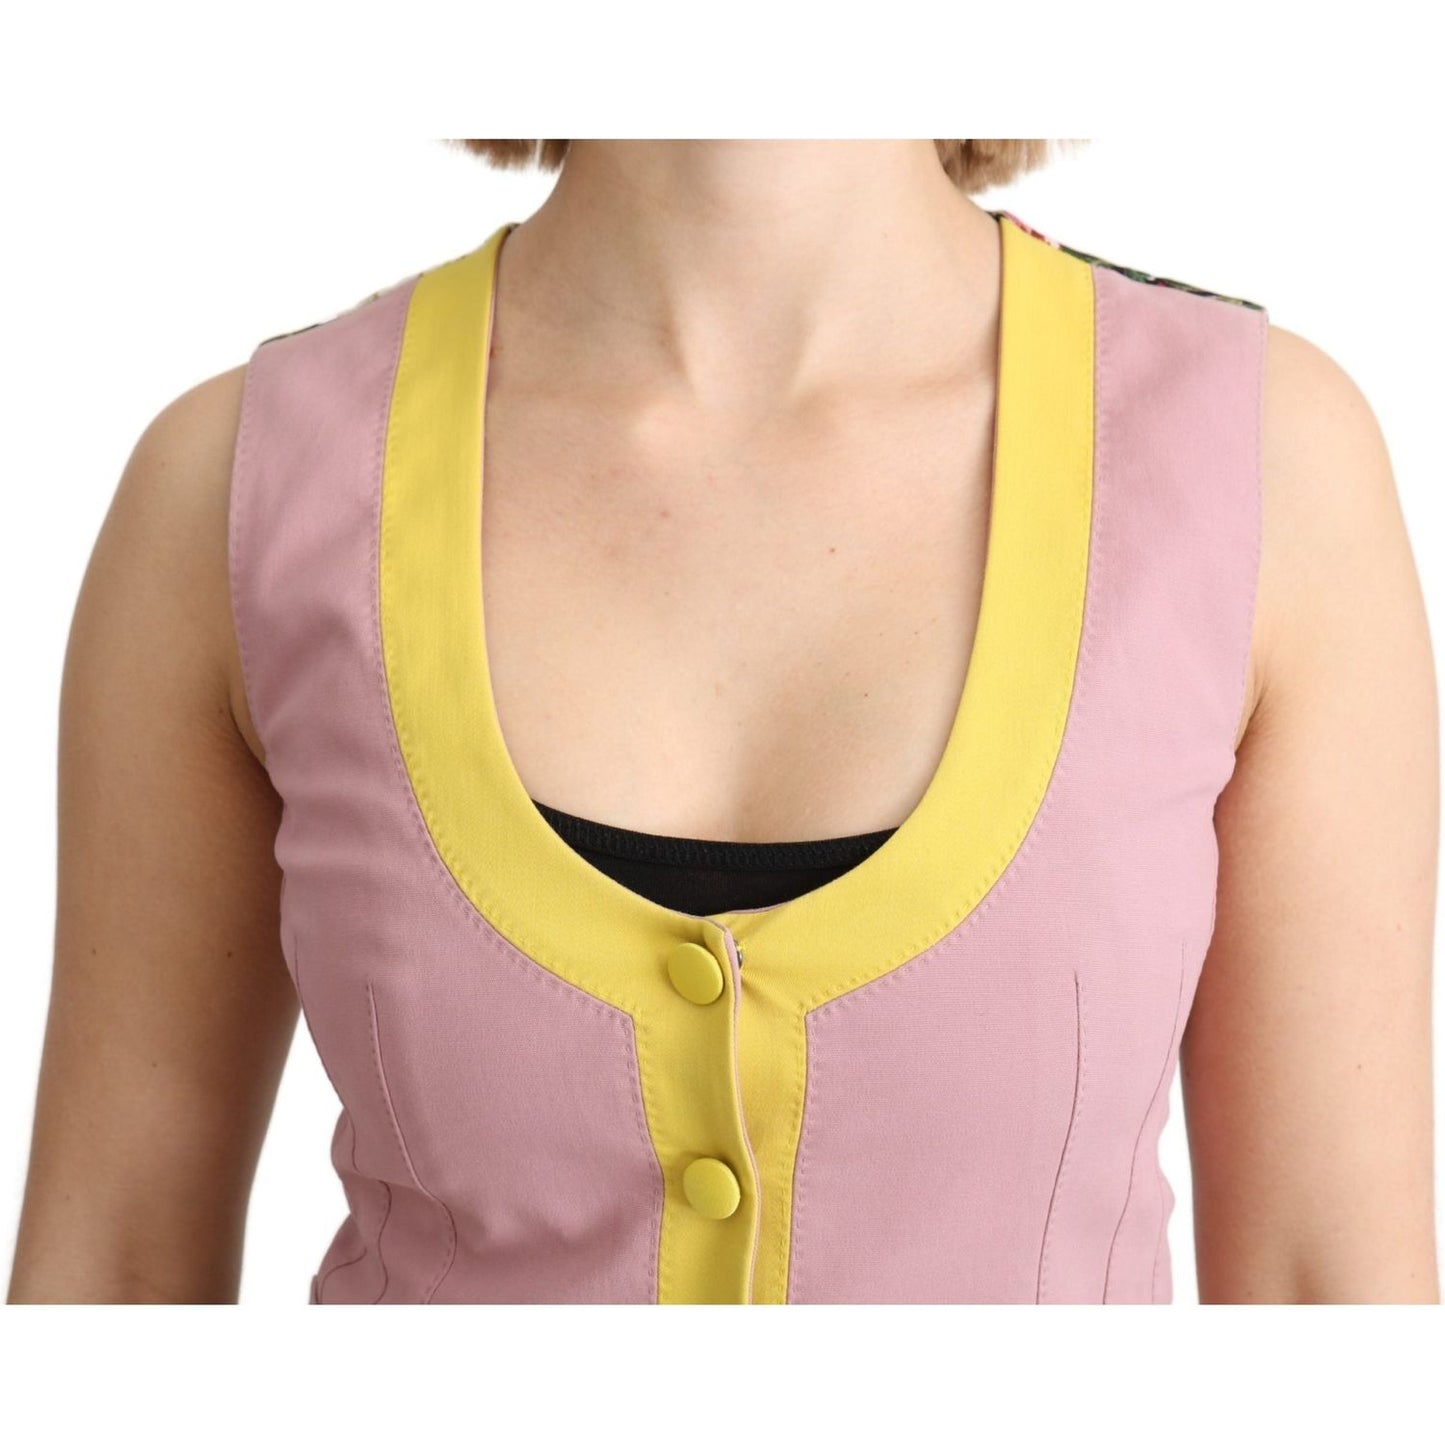 Dolce & Gabbana Chic Sleeveless Vest in Pink Hues pink-sleeveless-waistcoat-vest-cotton-top